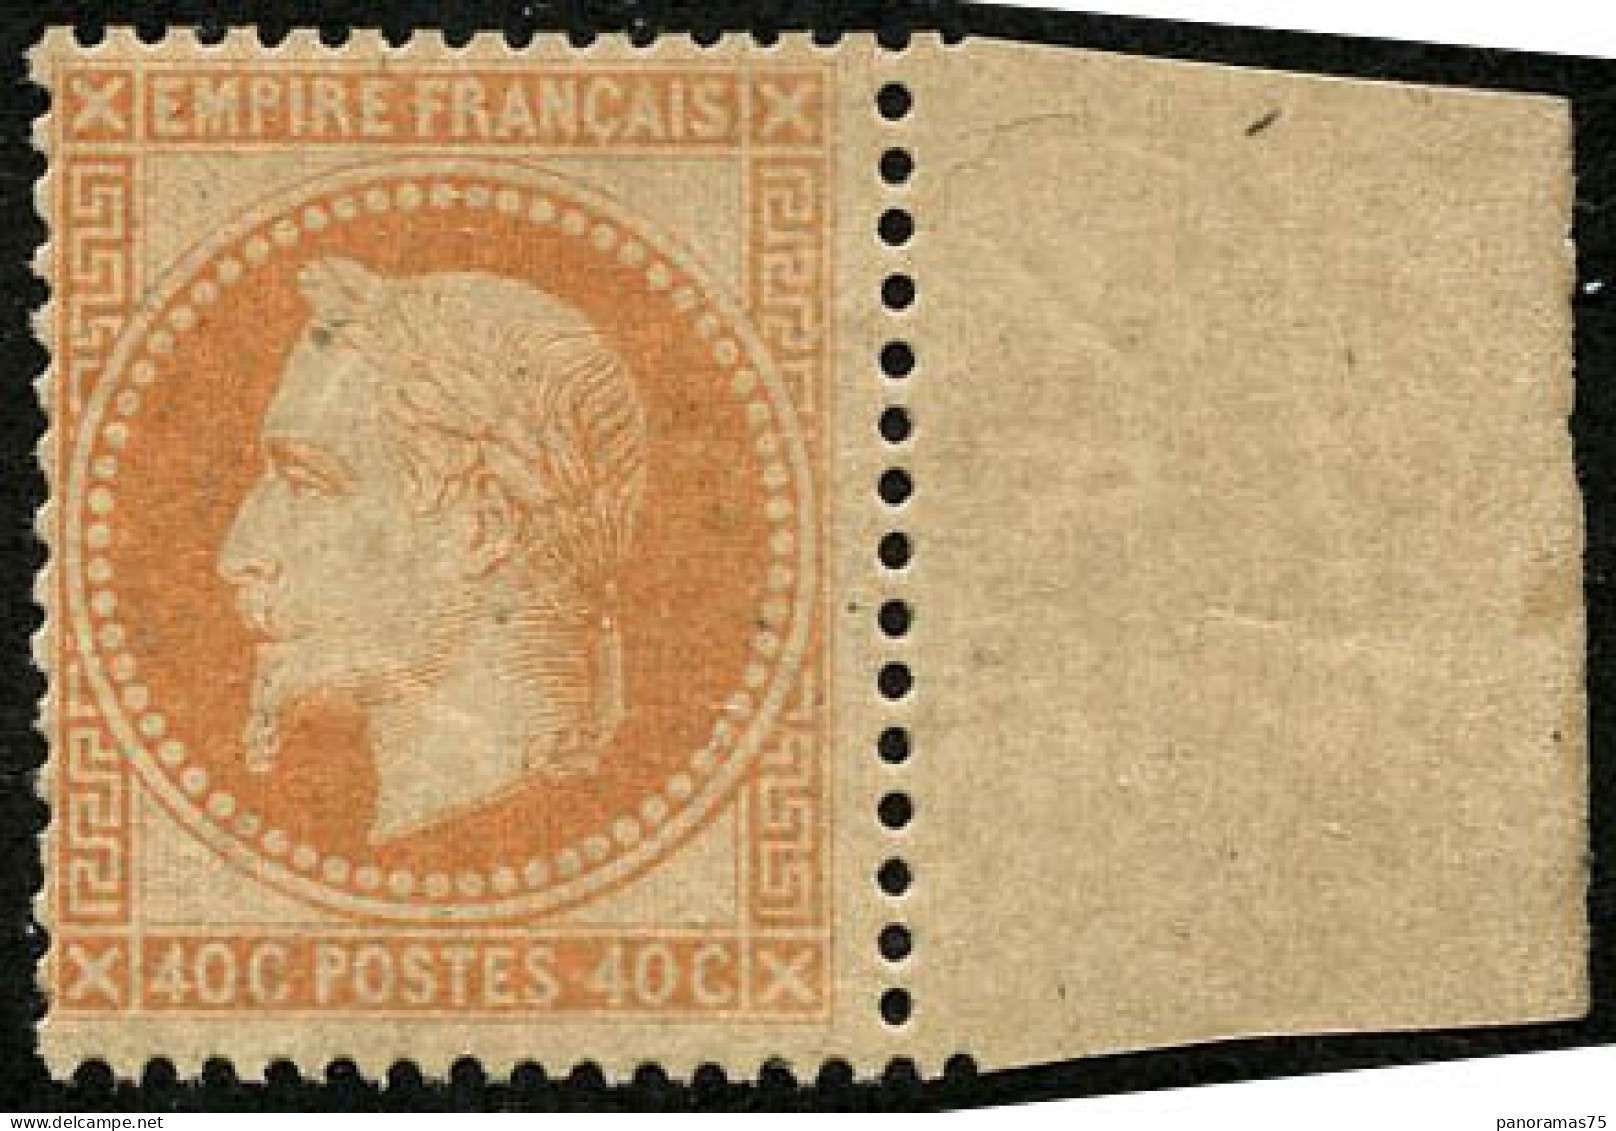 * N°31 40c Orange - TB - 1863-1870 Napoléon III. Laure